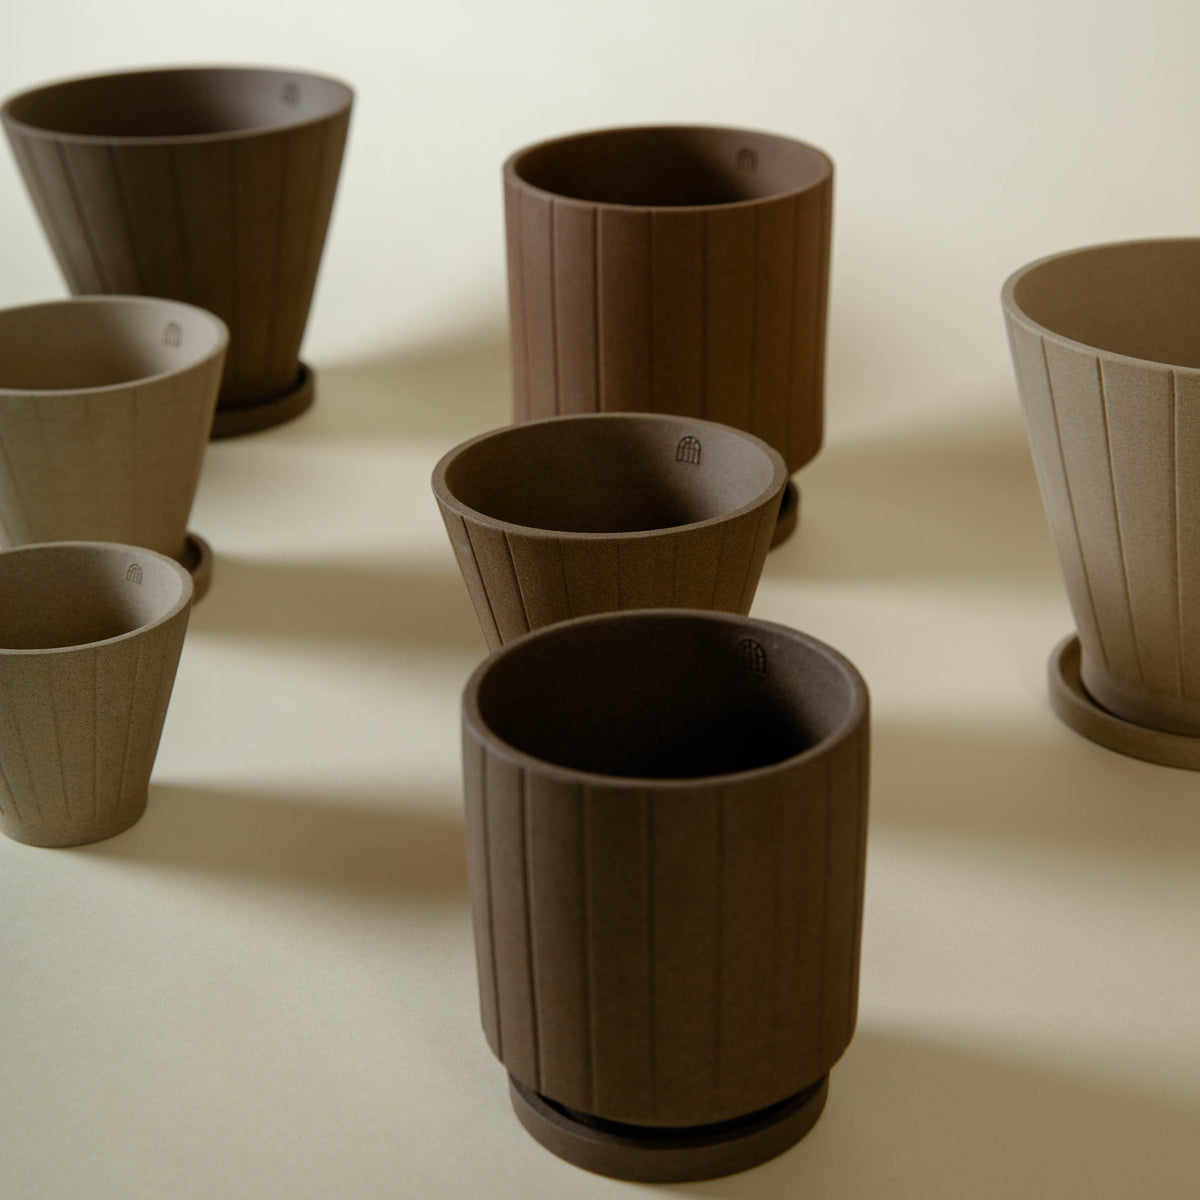 Ceramic Plant Pots